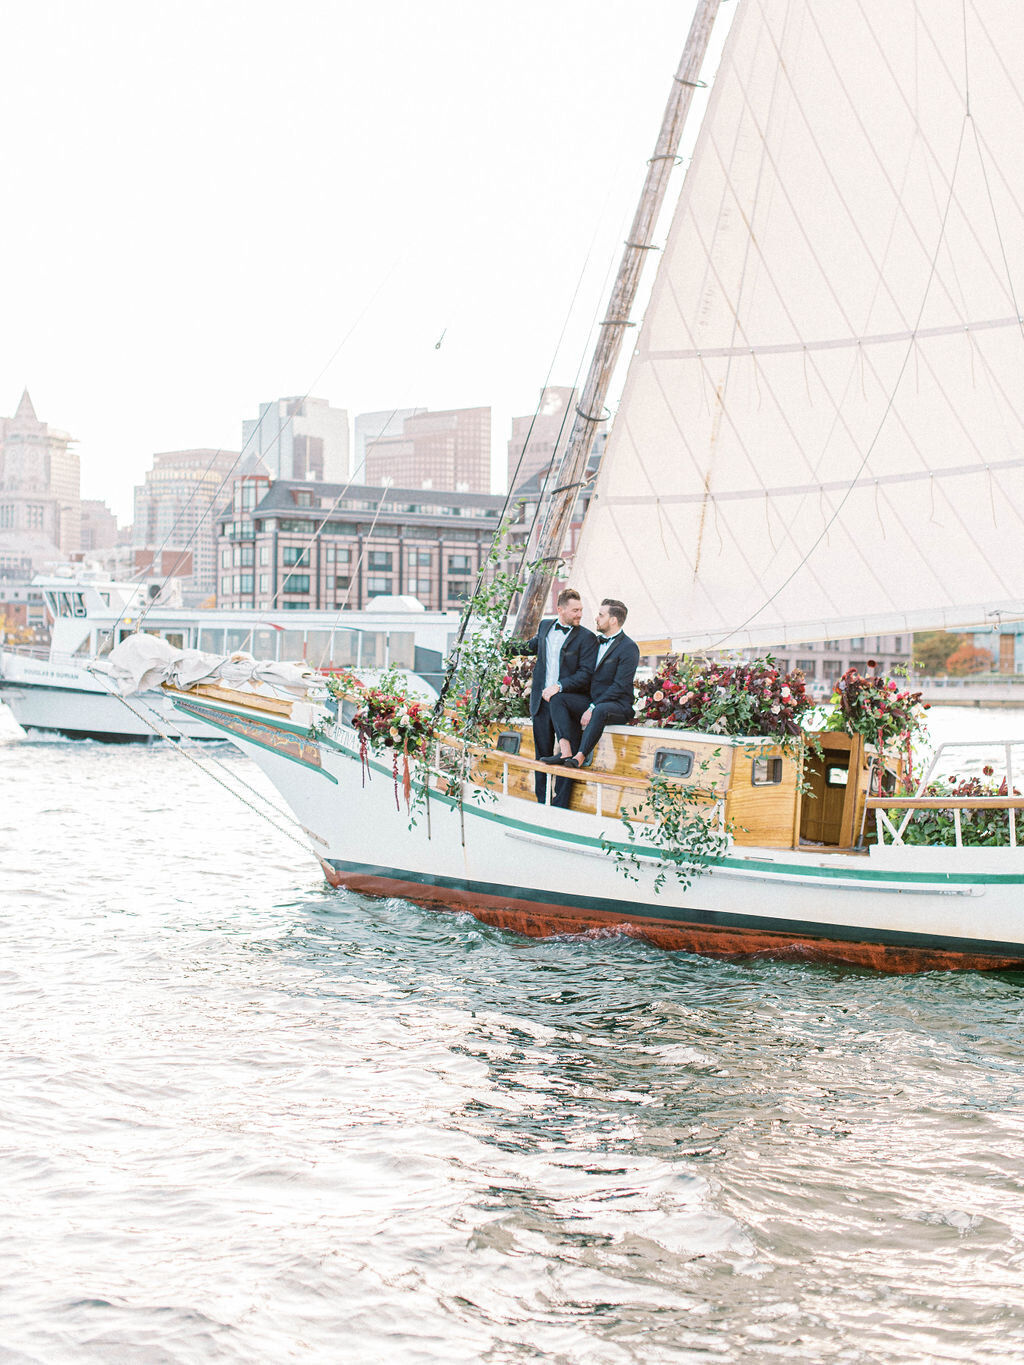 Kate-Murtaugh-Events-Boston-Harbor-sail-boat-yacht-elopement-wedding-planner